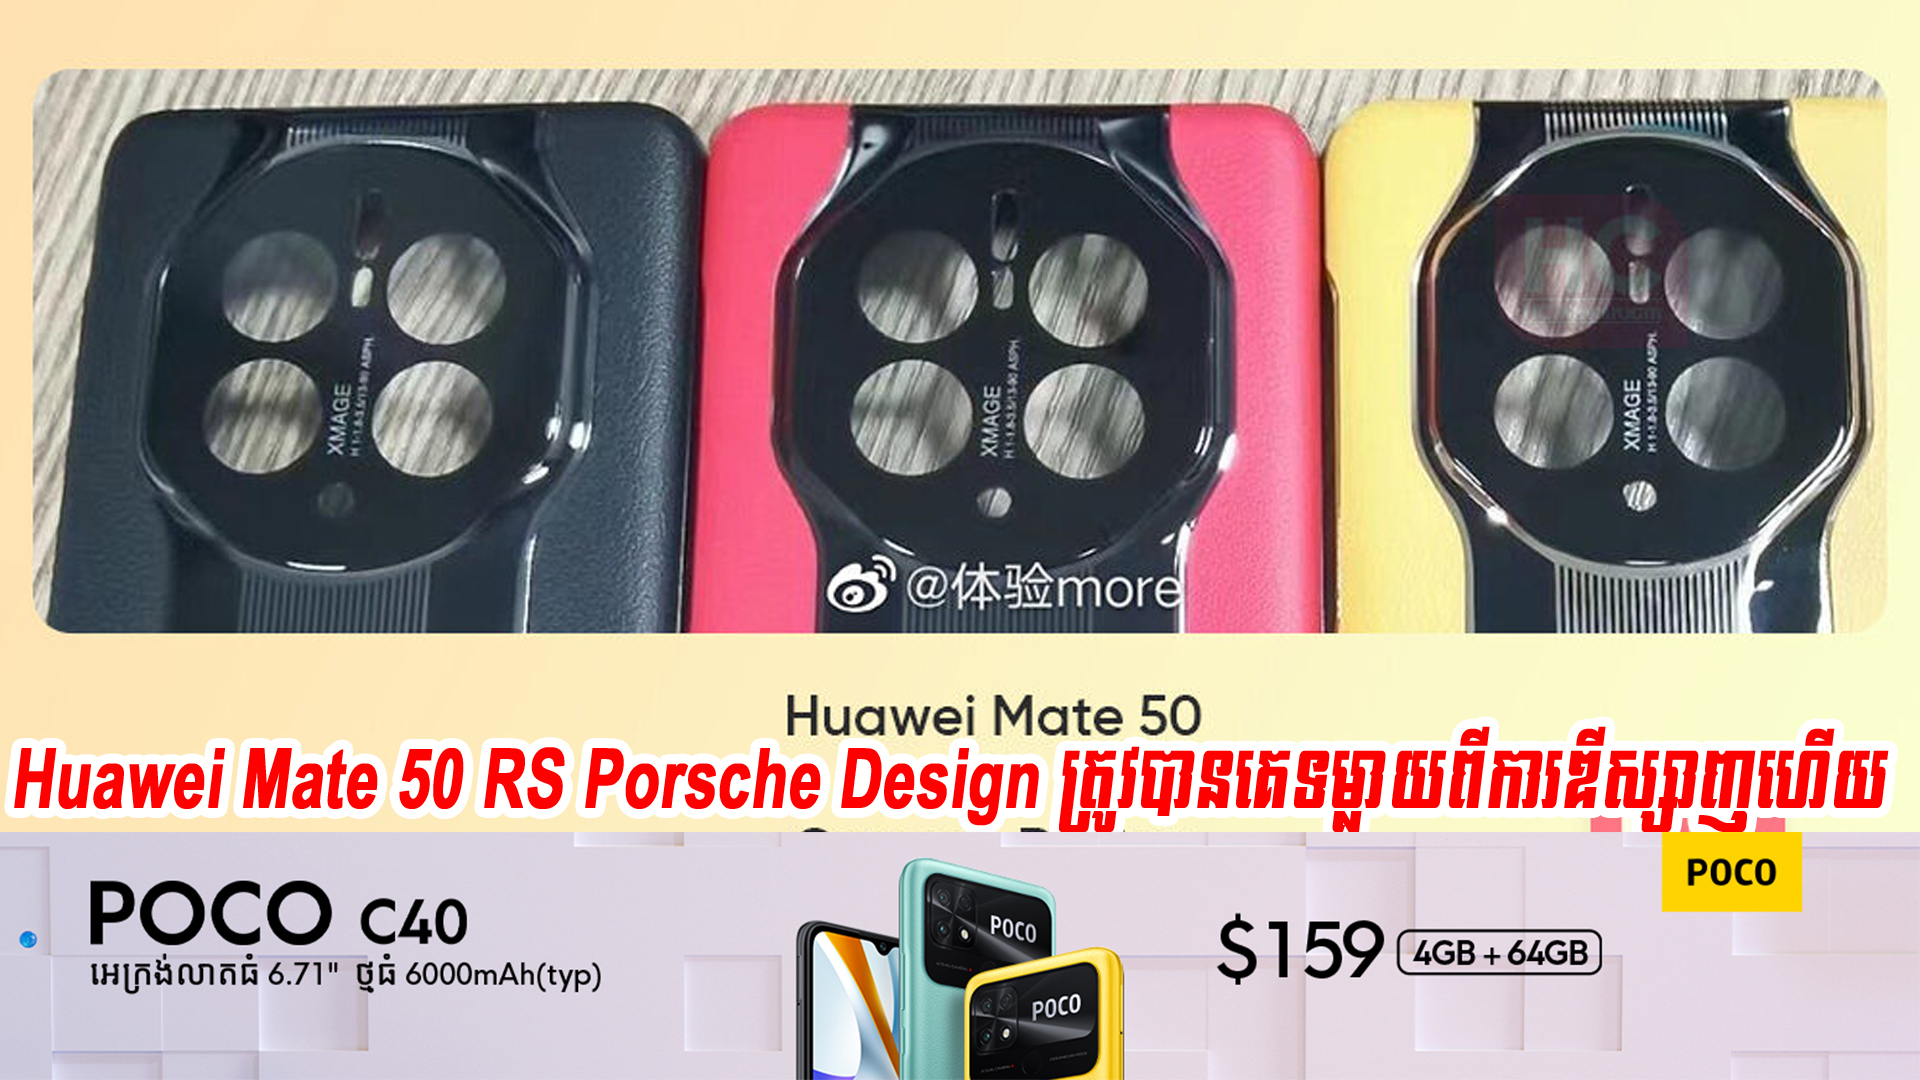 Huawei Mate 50 RS Porsche Design ត្រូវបានគេទម្លាយពីការឌីស្សាញប្រព័ន្ធកាមេរ៉ានៅលើផ្ទៃកញ្ចក់ខ្នងខាងក្រោយ